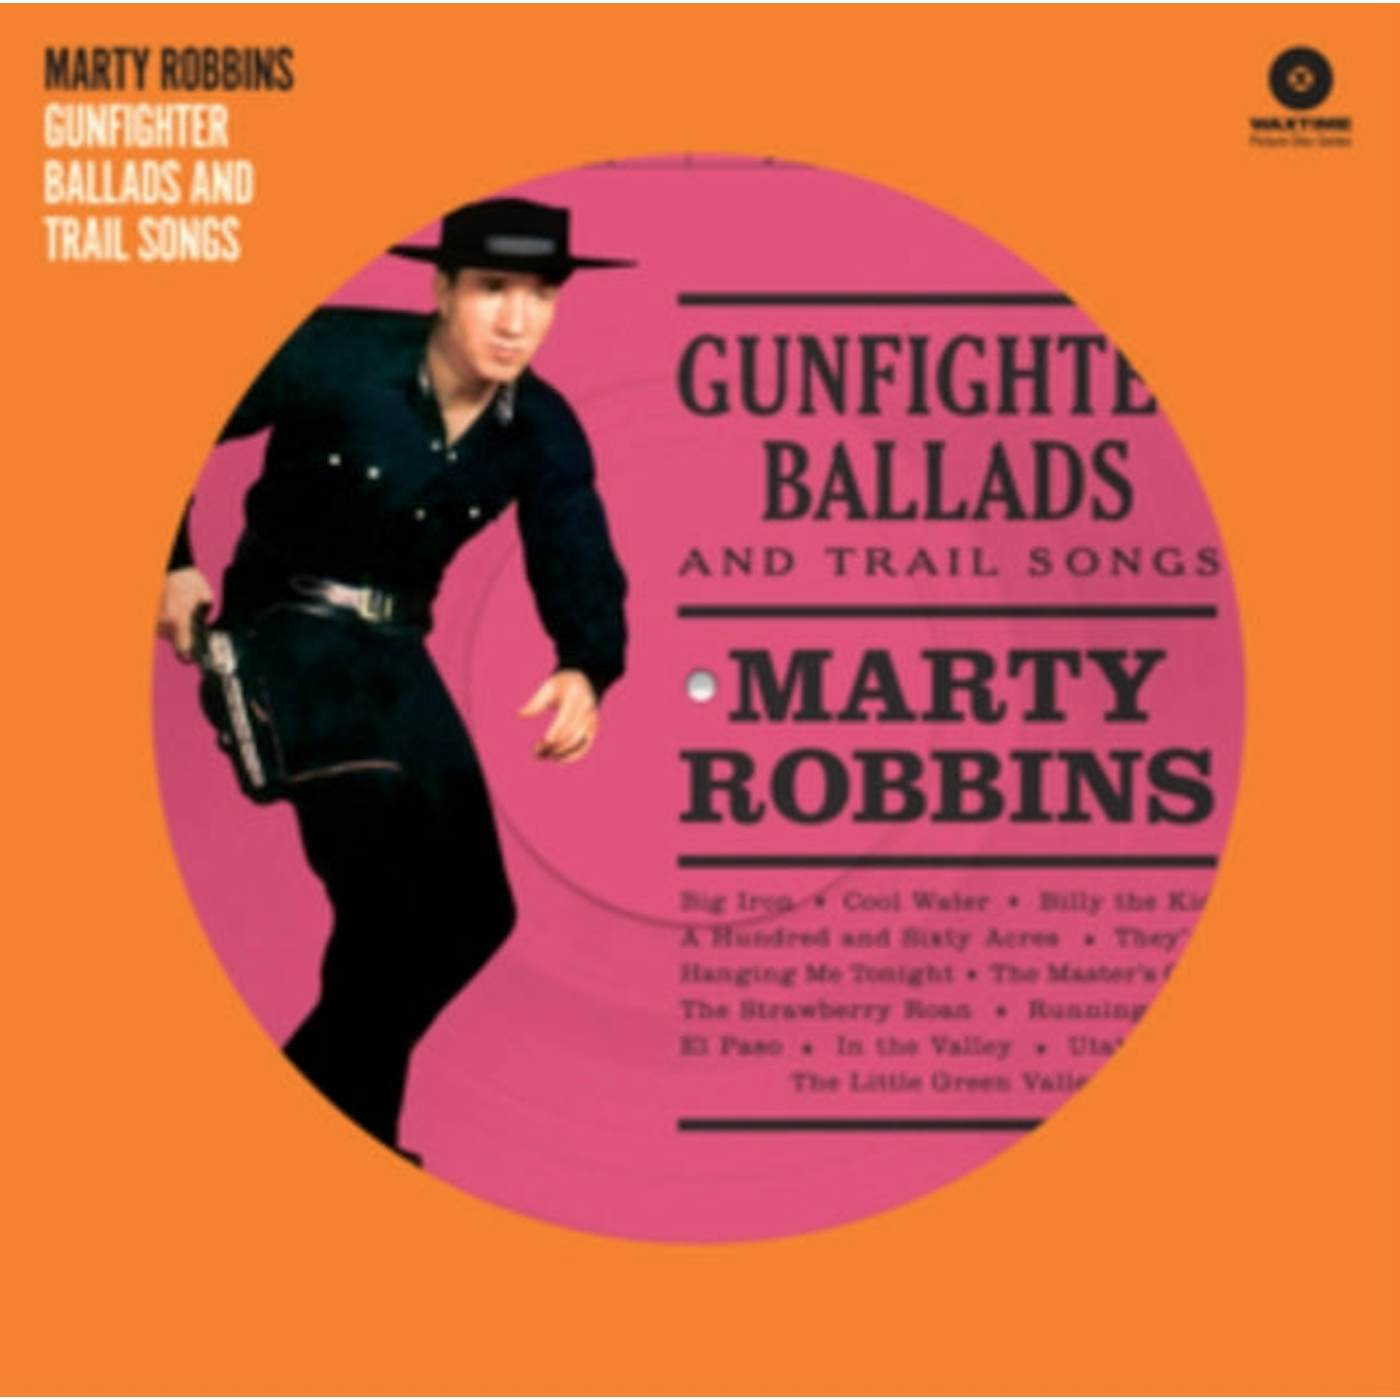 Marty Robbins LP Vinyl Record - Gunfighter Ballads And Trail Songs (Solid Pink Vinyl) (+4 Bonus Tracks)